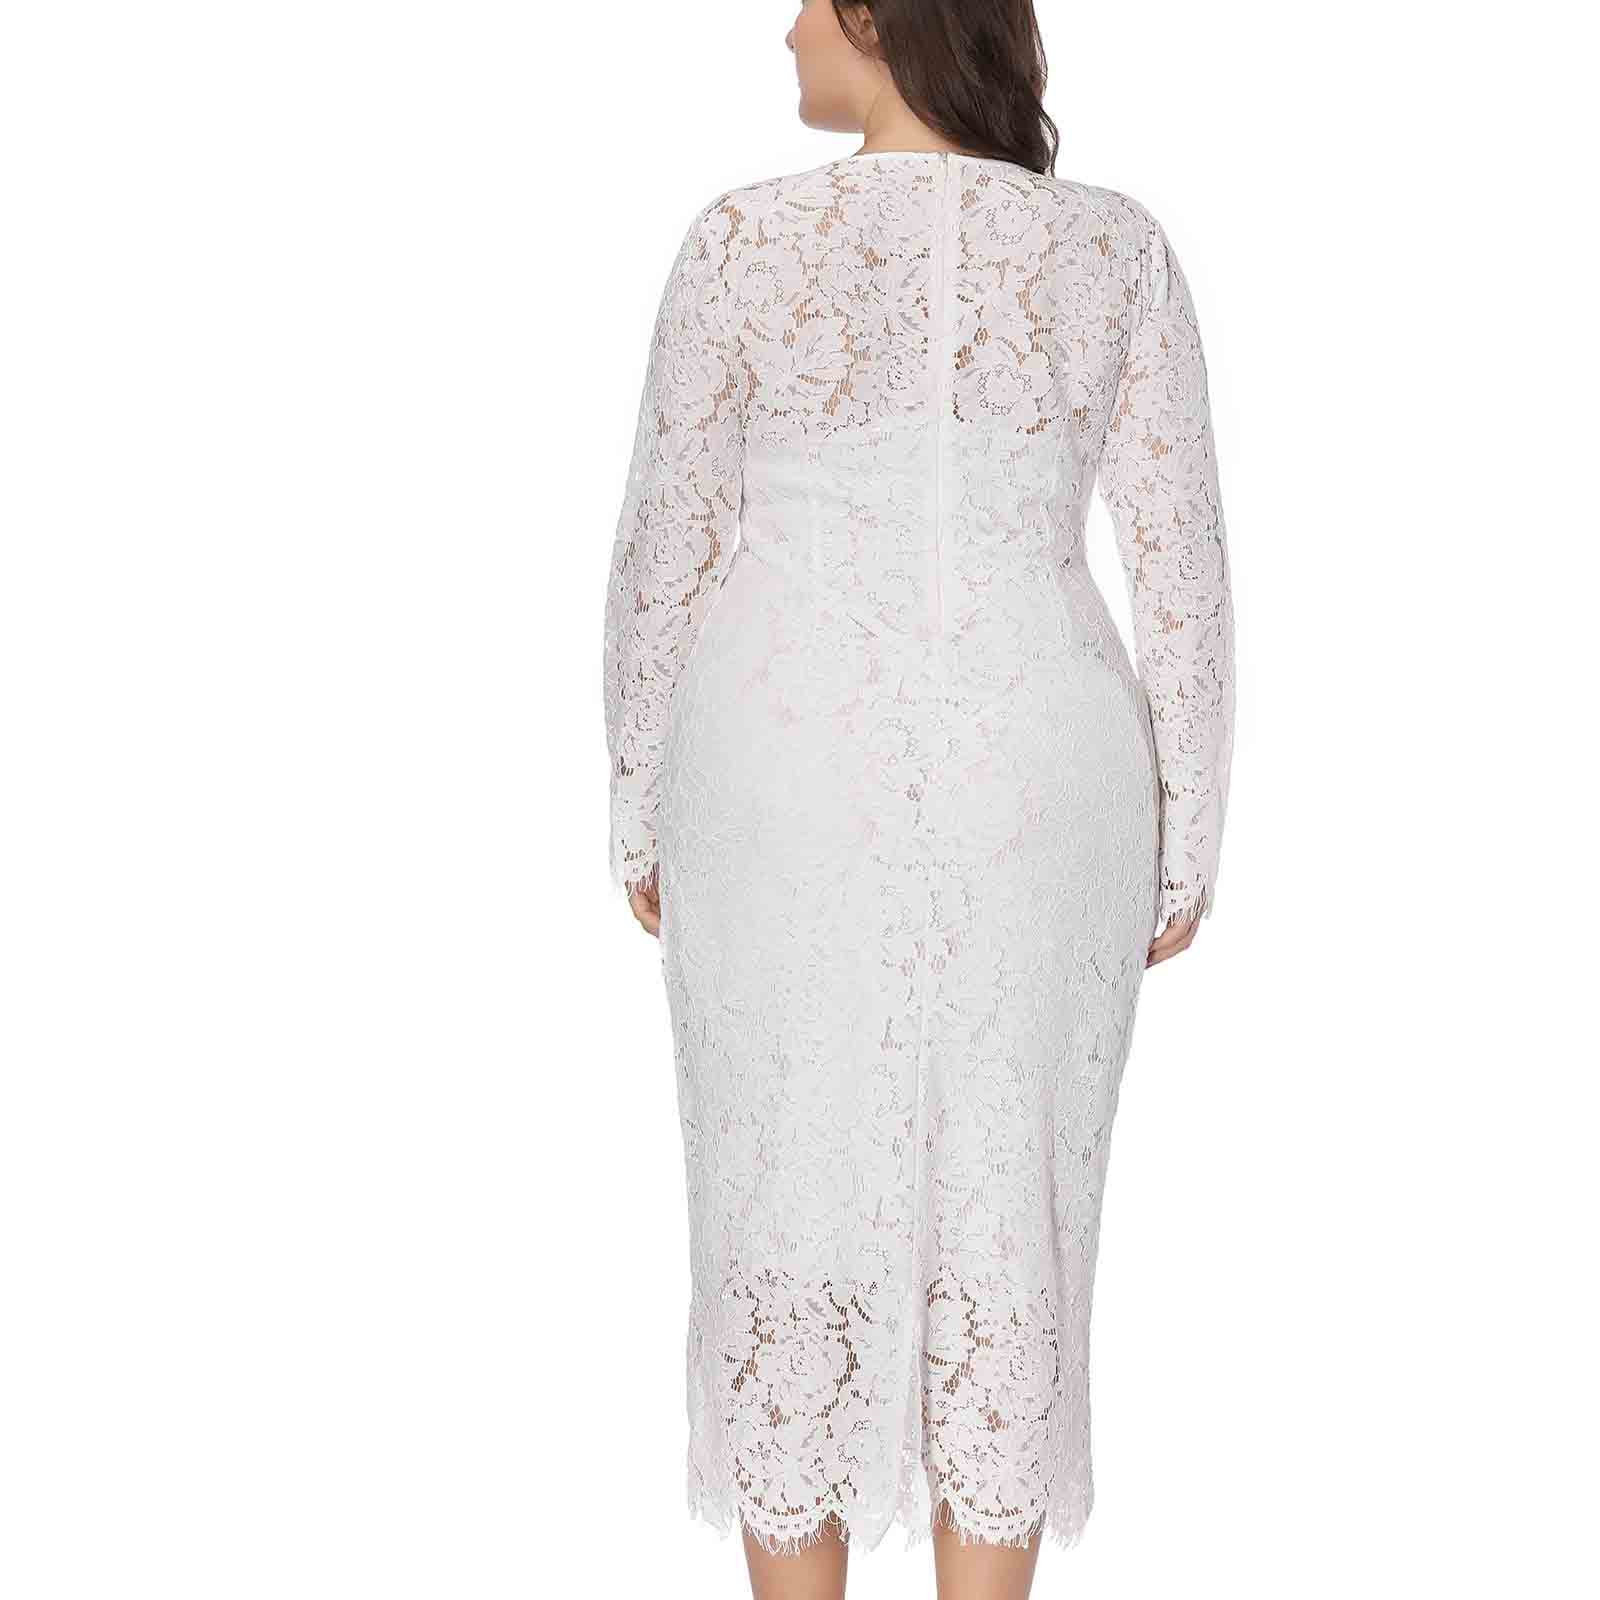 Amazon has a clearance sale on plus-size dresses - mlive.com